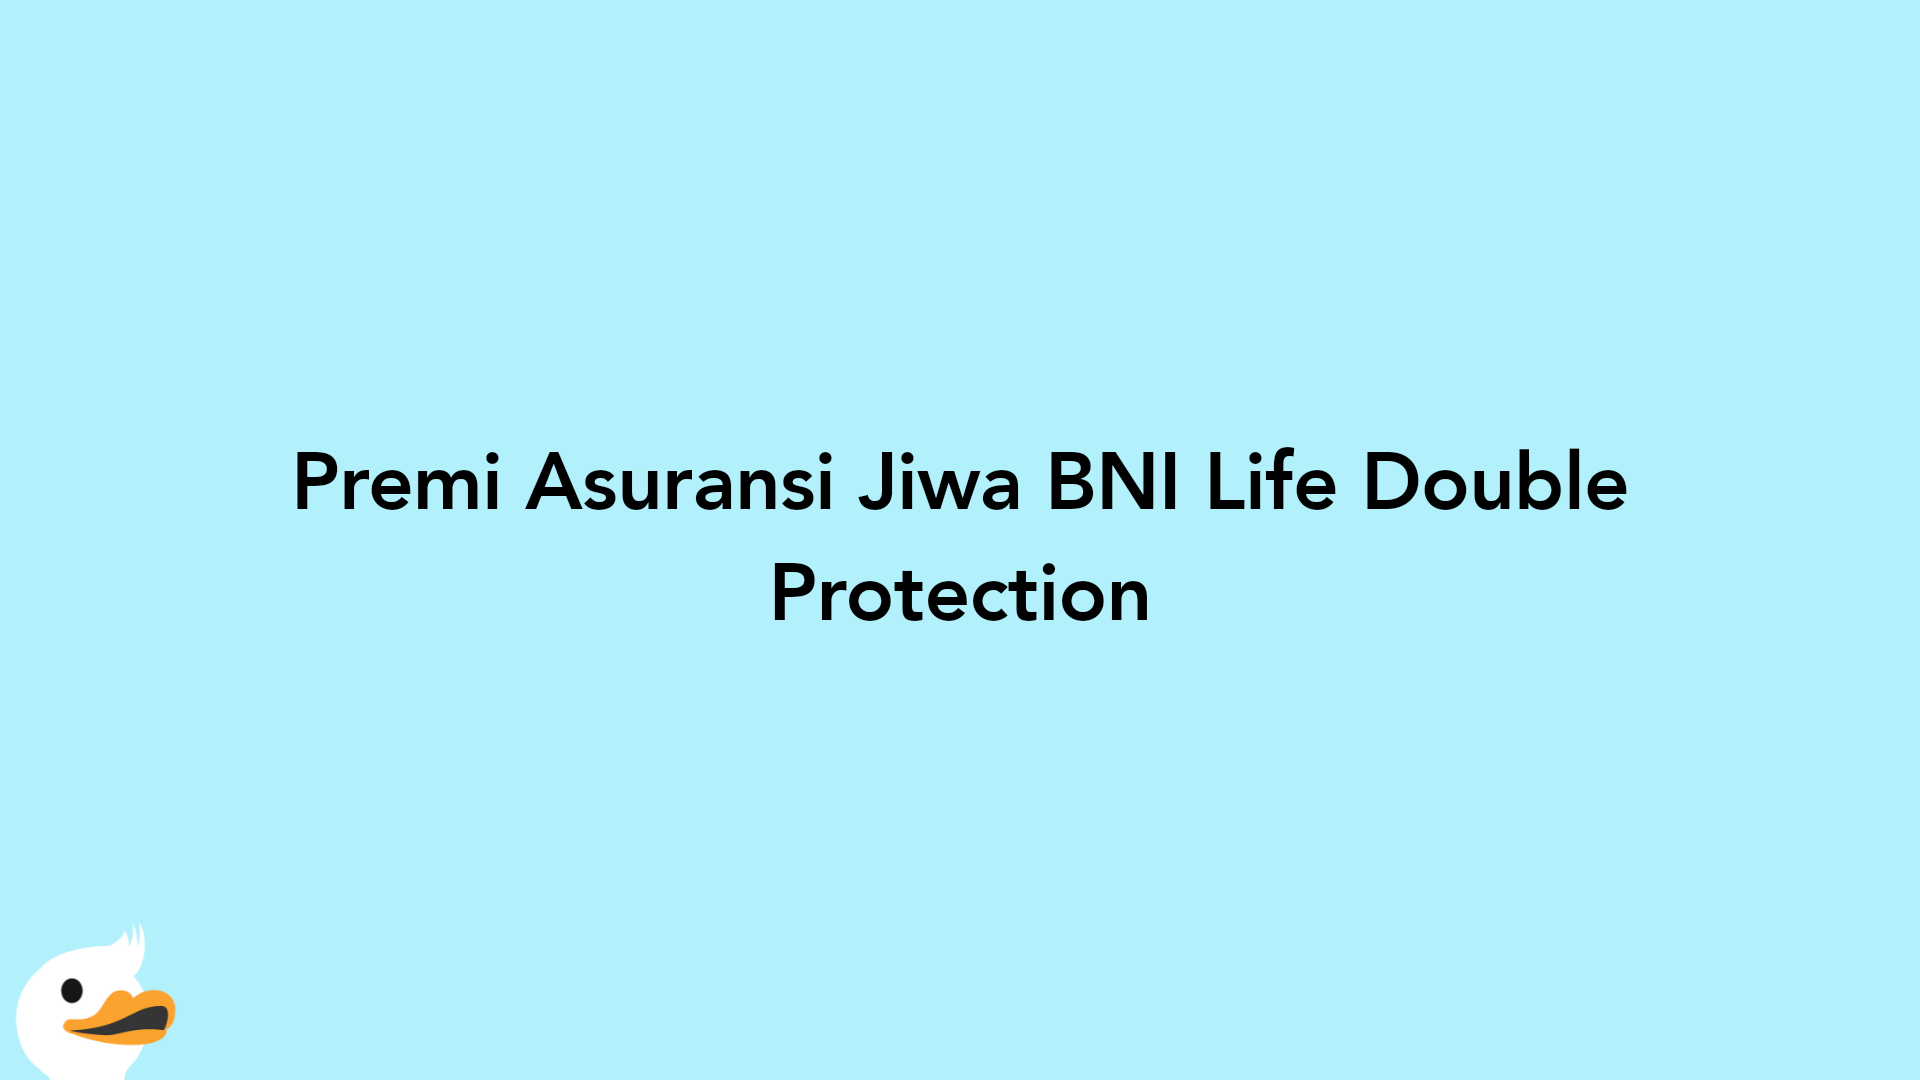 Premi Asuransi Jiwa BNI Life Double Protection